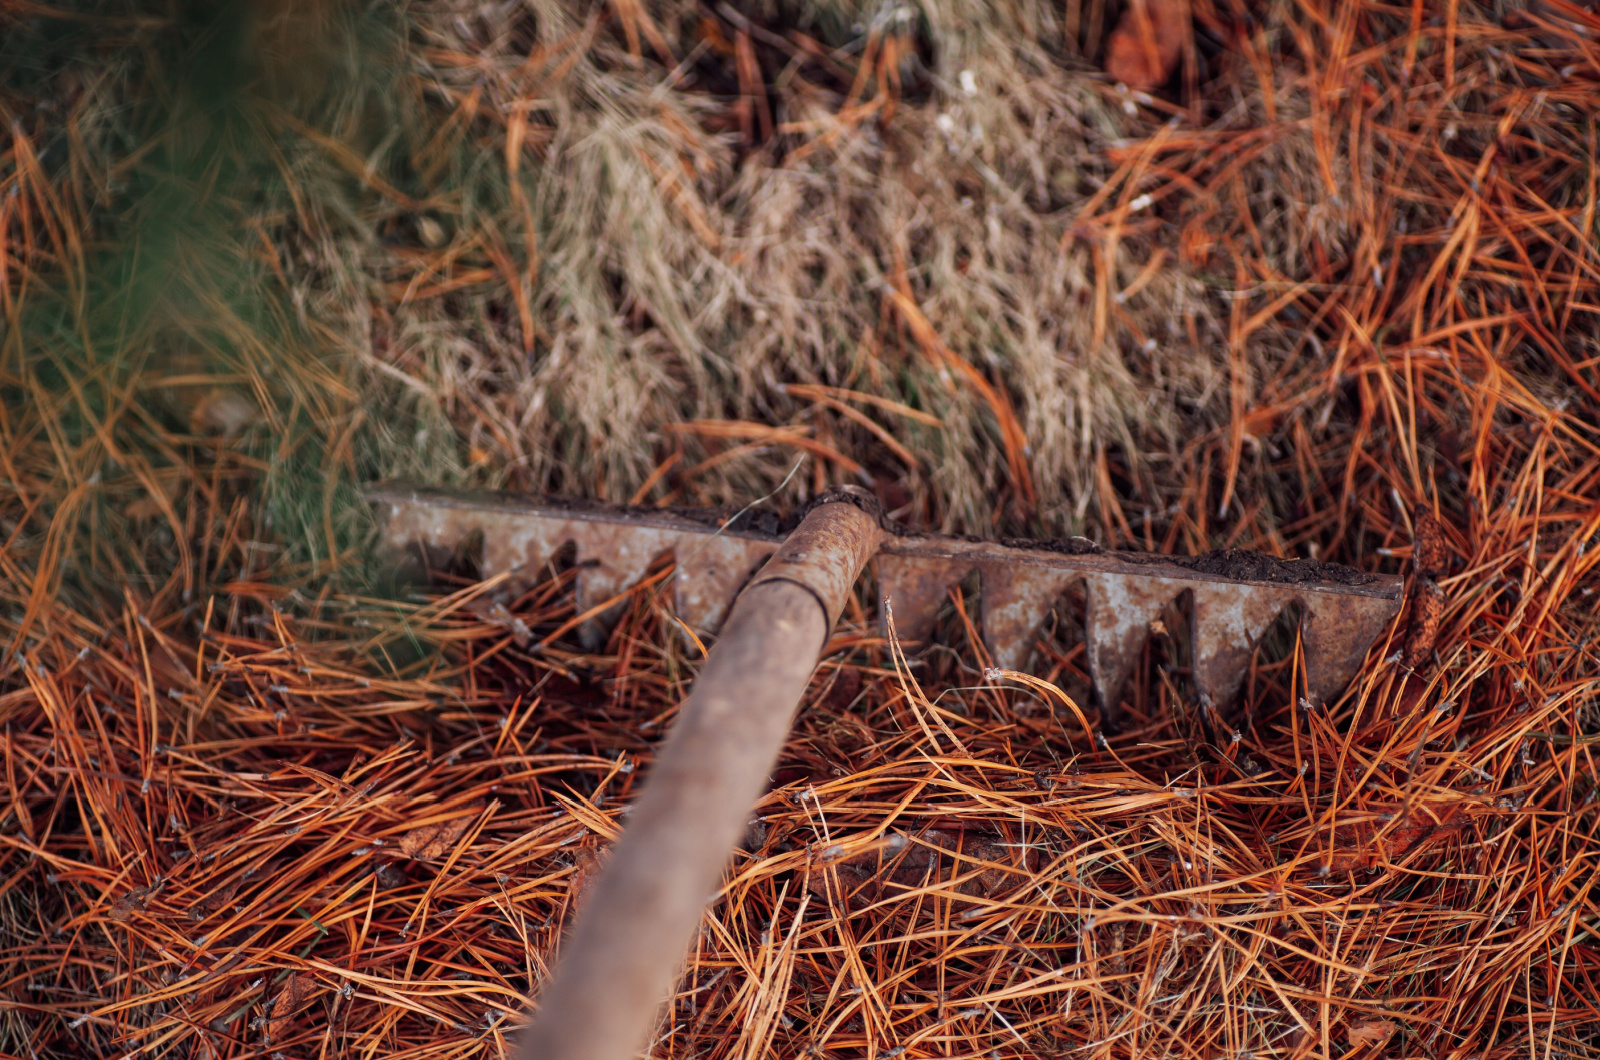 gathering pine needles on ground with old rake